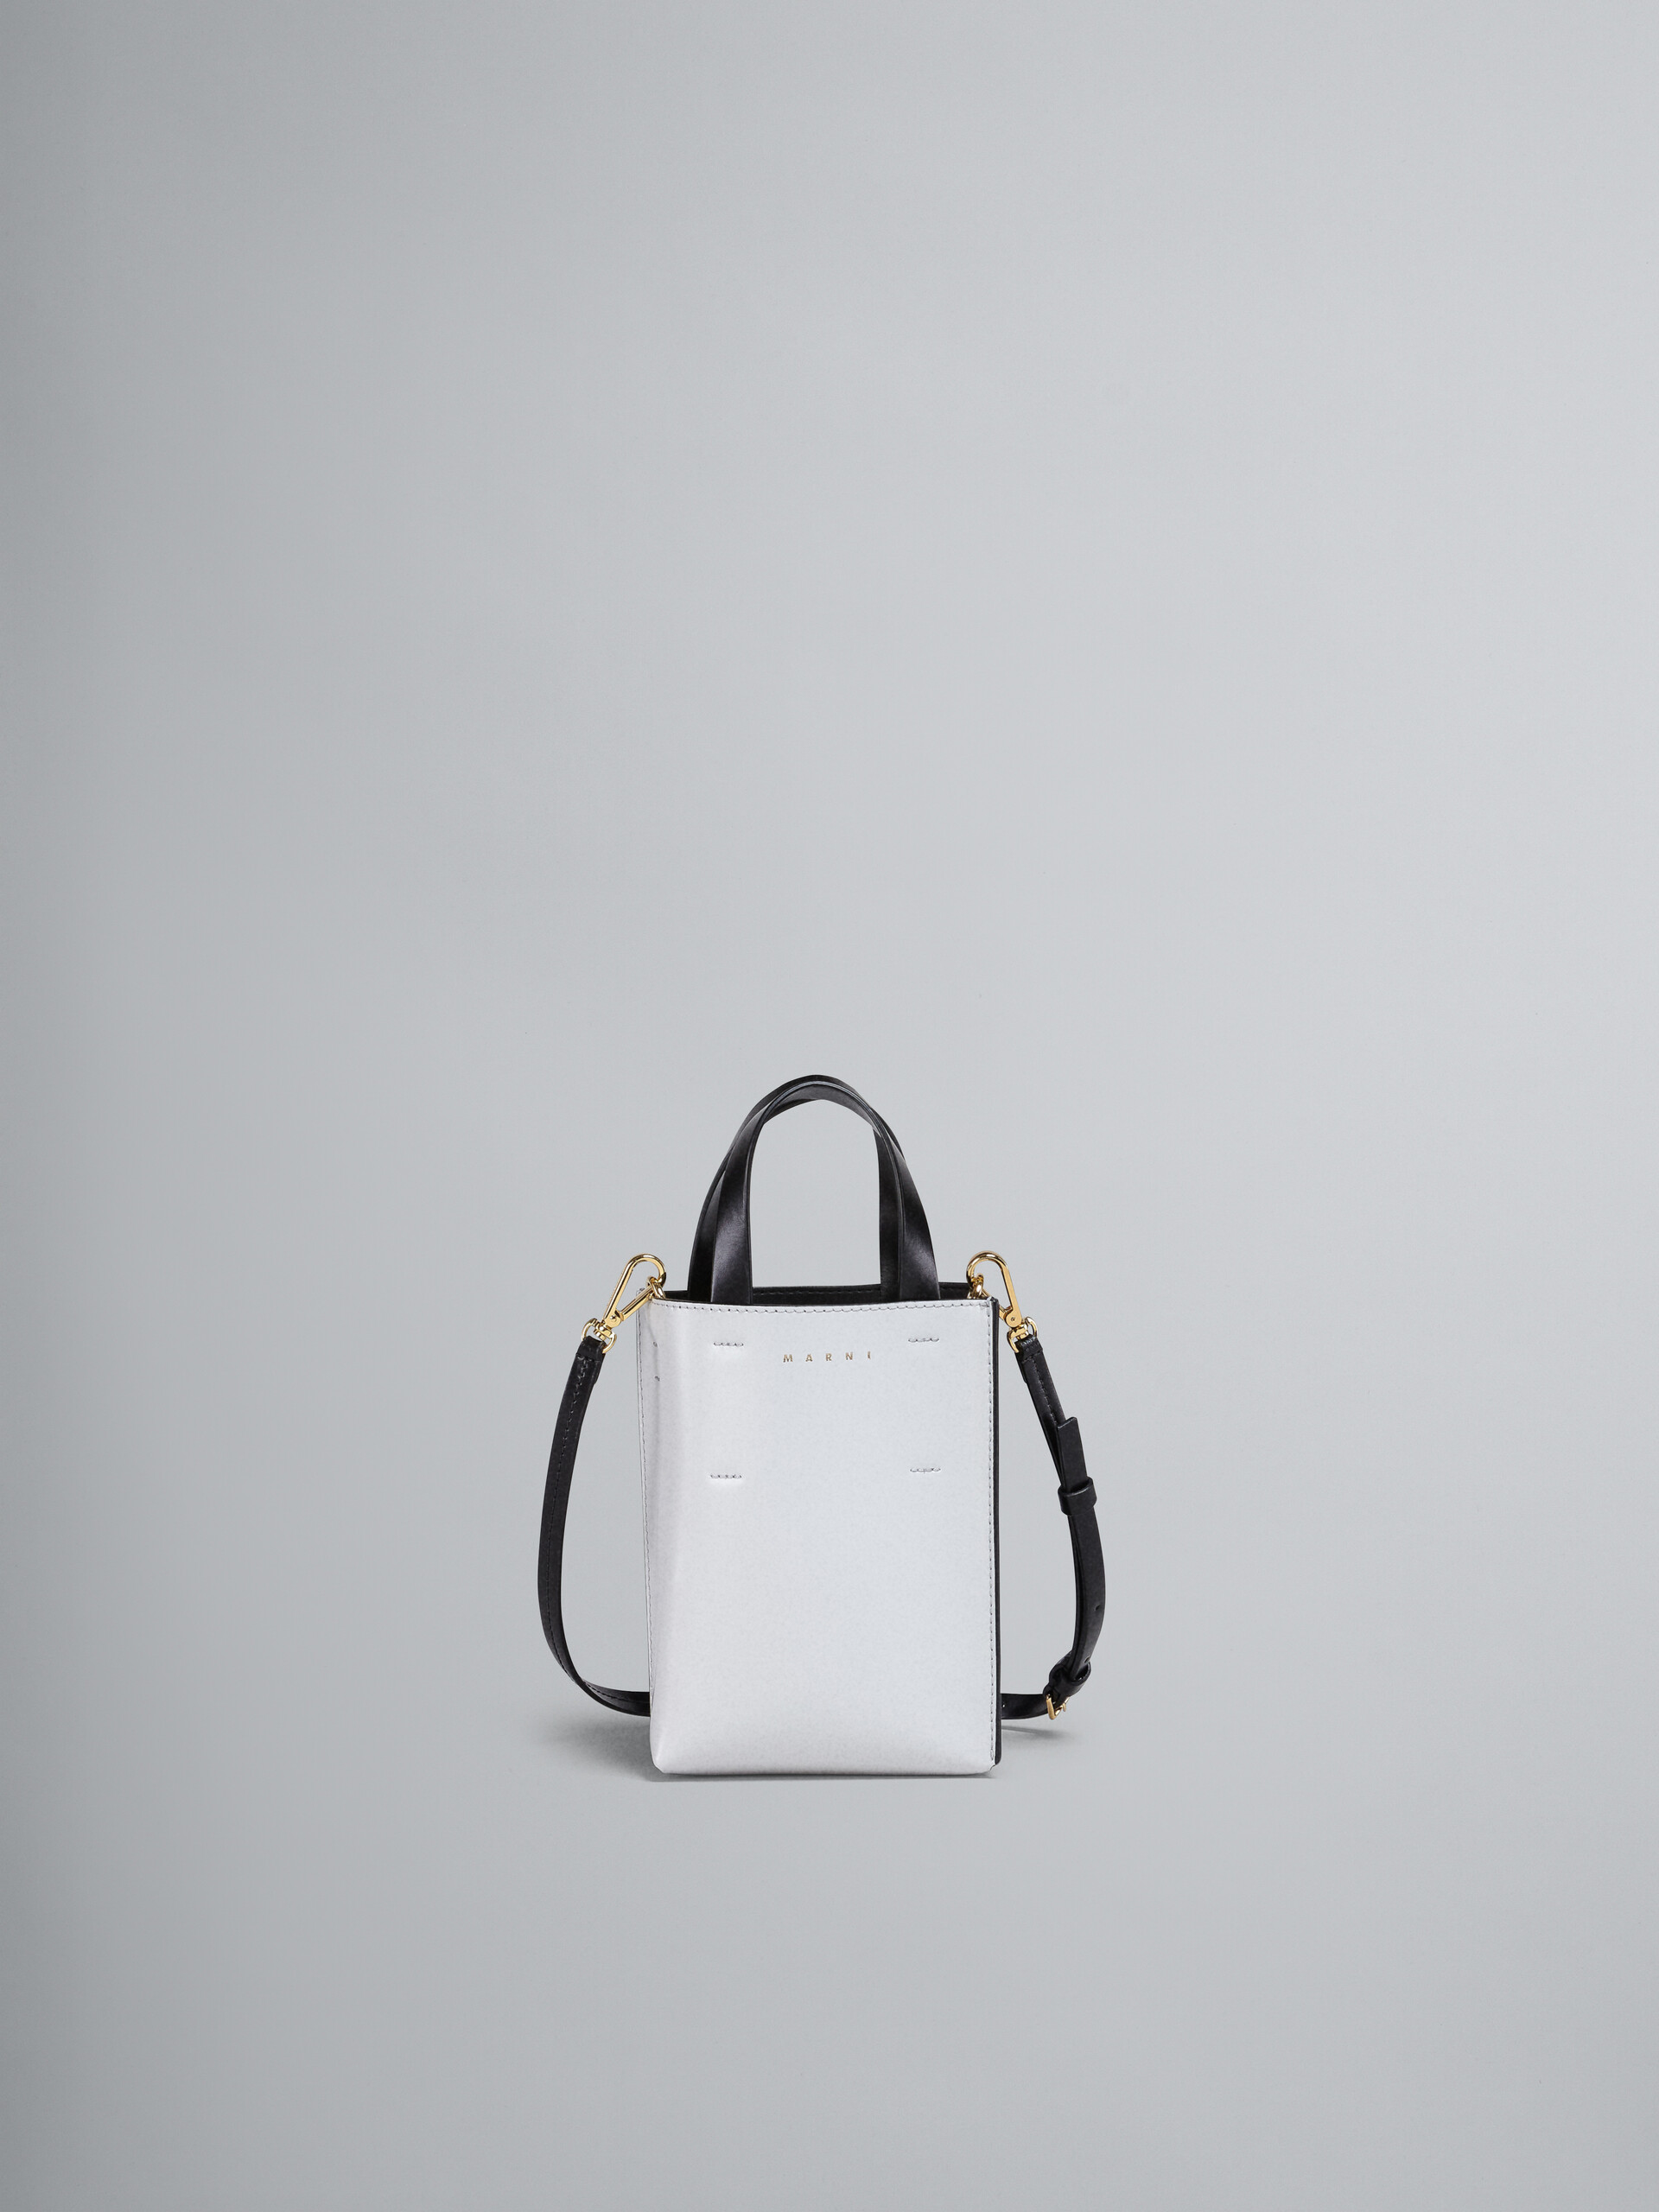 MUSEO bag nano in pelle bianca e nera - Borse shopping - Image 1